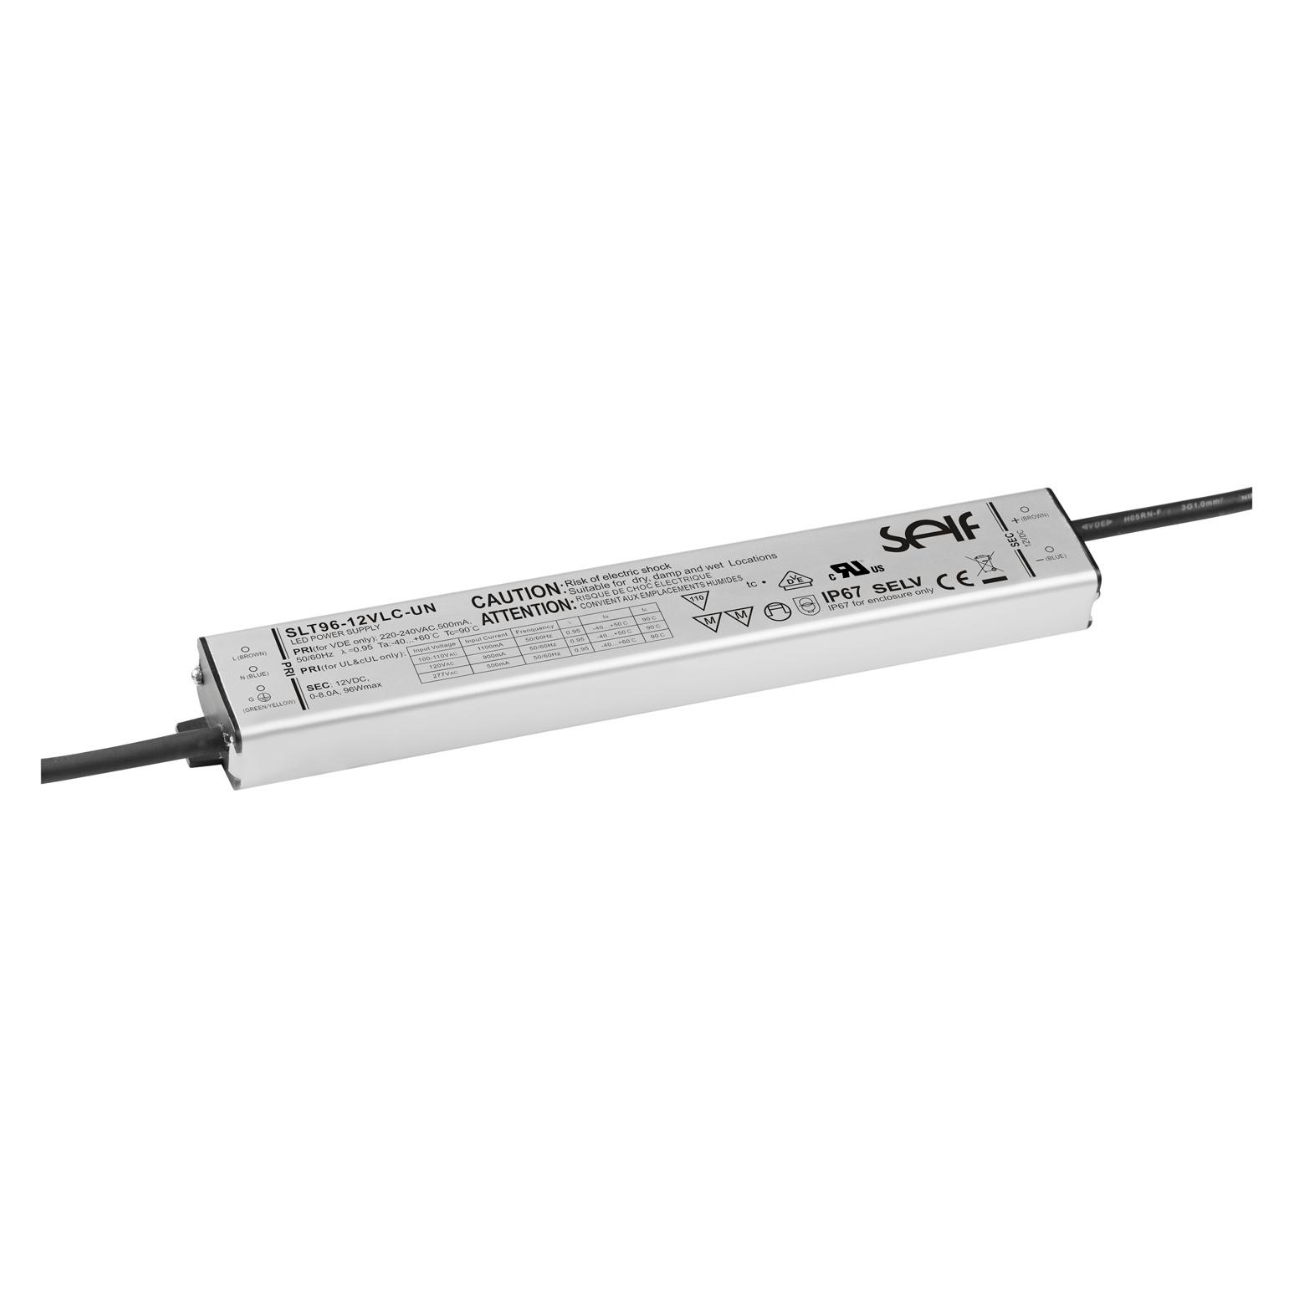 SELF SLT96-24VLC-UN (96W/24V) LED-Netzteil für Signage, LED-Lichtwerbung oder LED-Beleuchtung